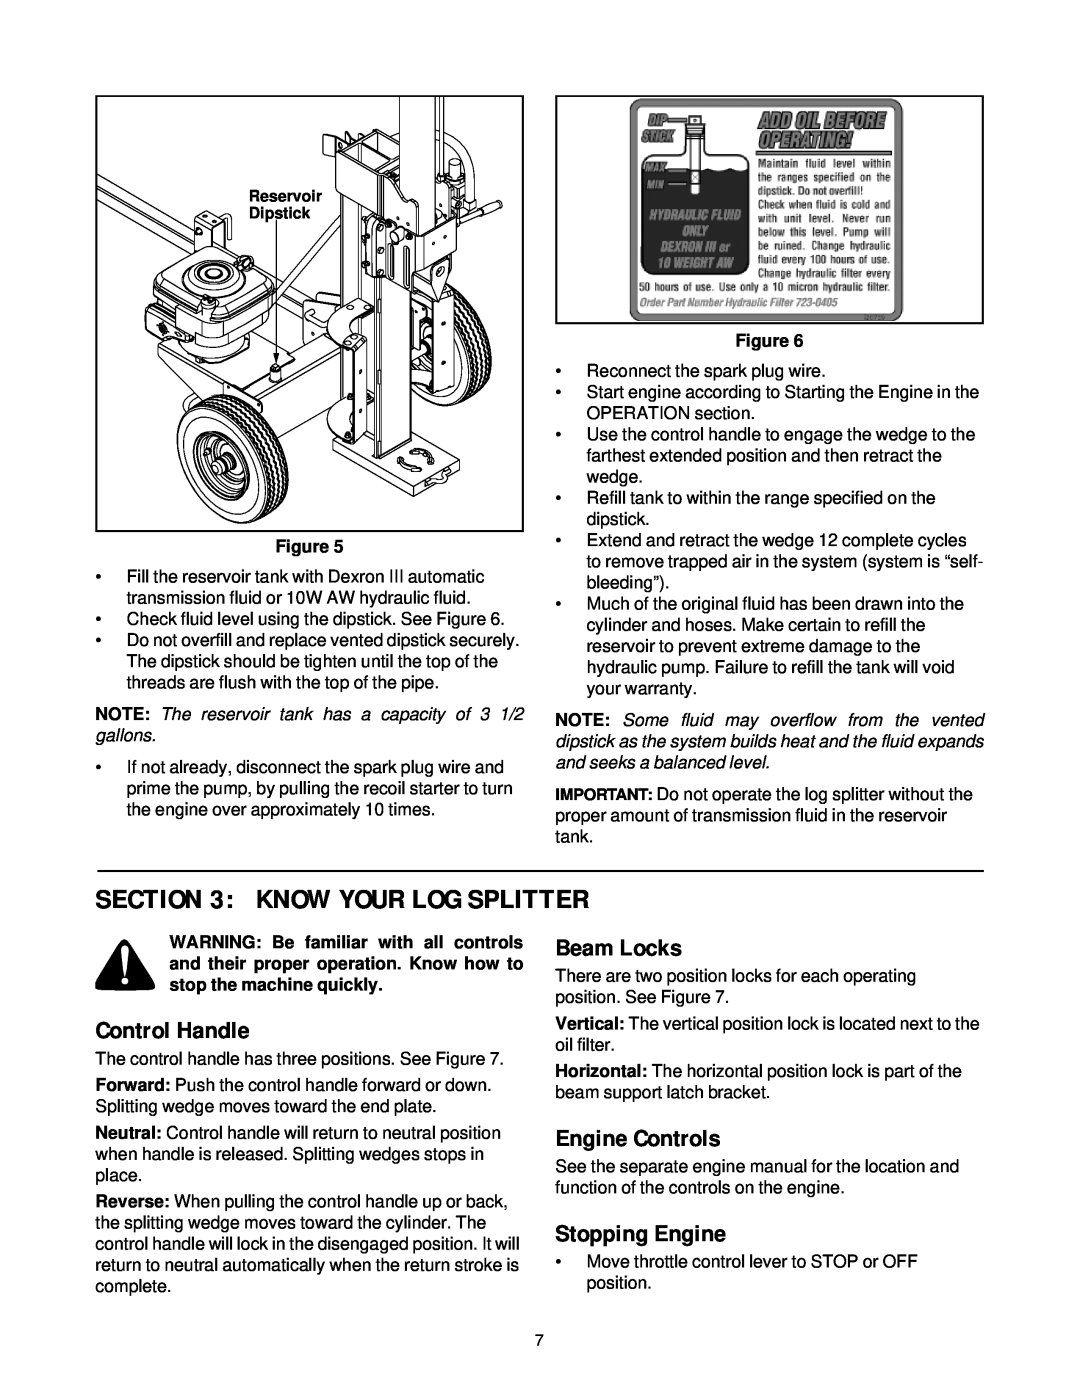 MTD 500 thru 510 manual Know Your Log Splitter, Control Handle, Beam Locks, Engine Controls, Stopping Engine 